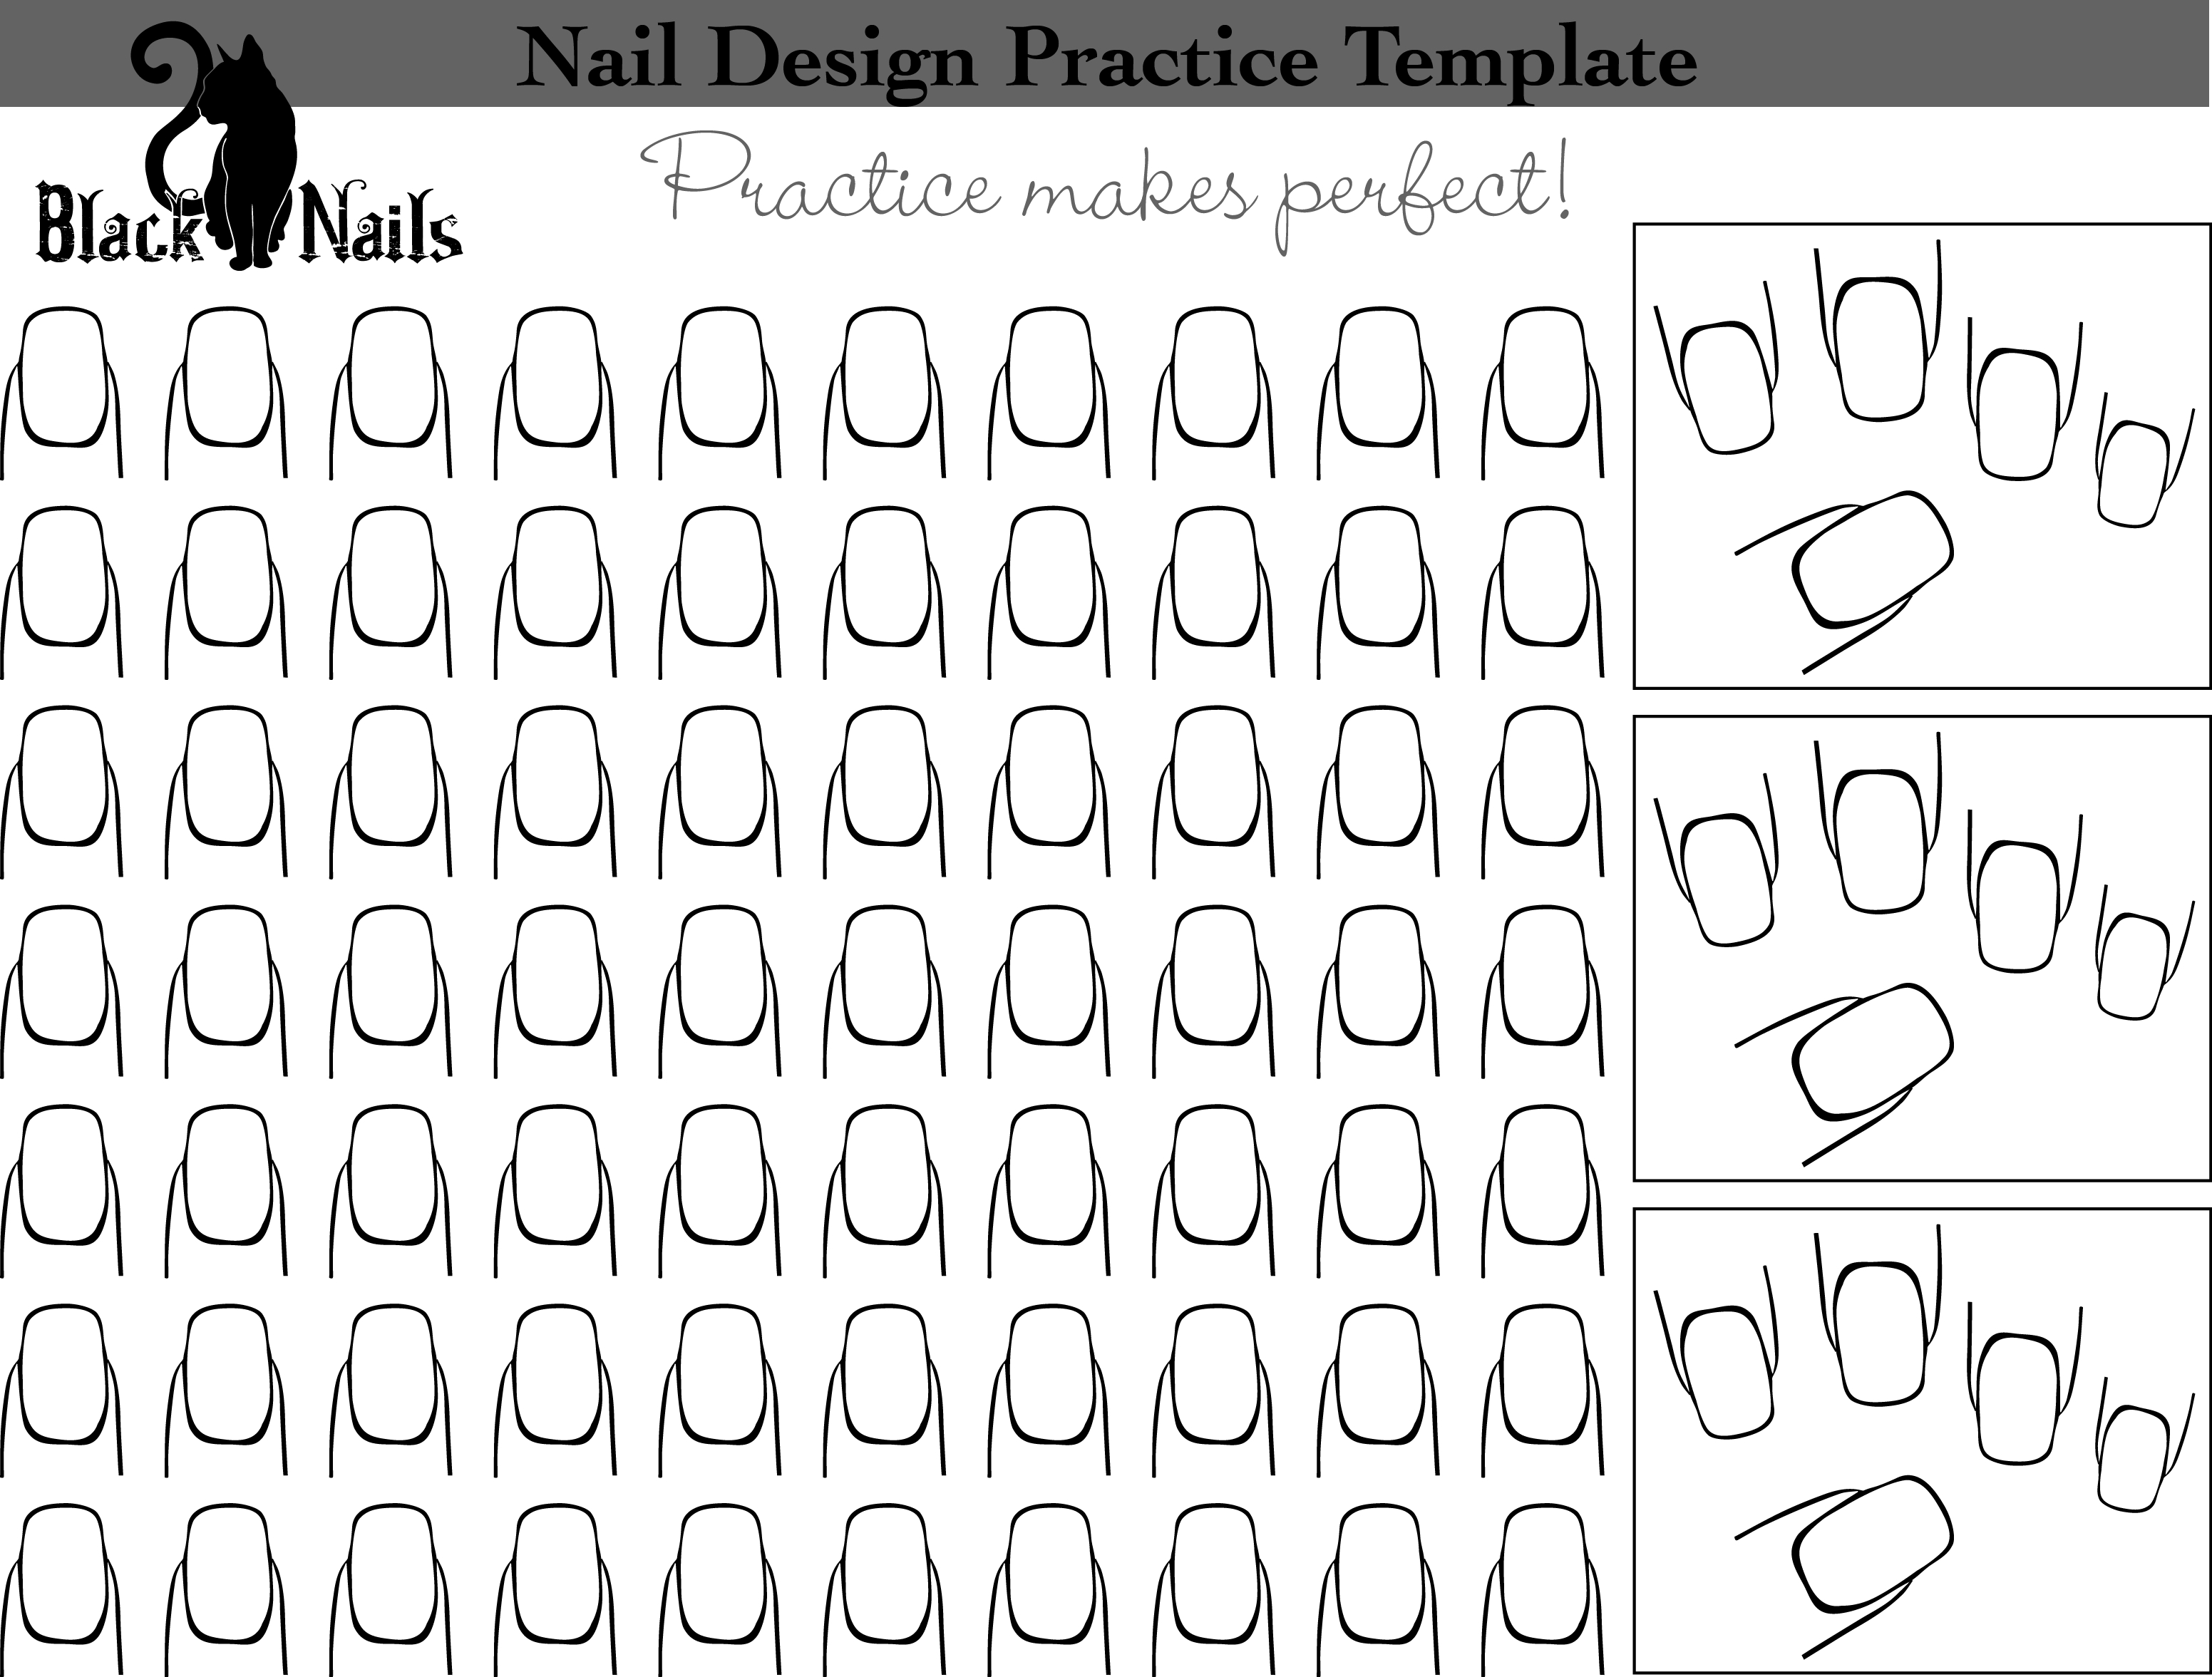 4. Nail Art Designs - wide 6